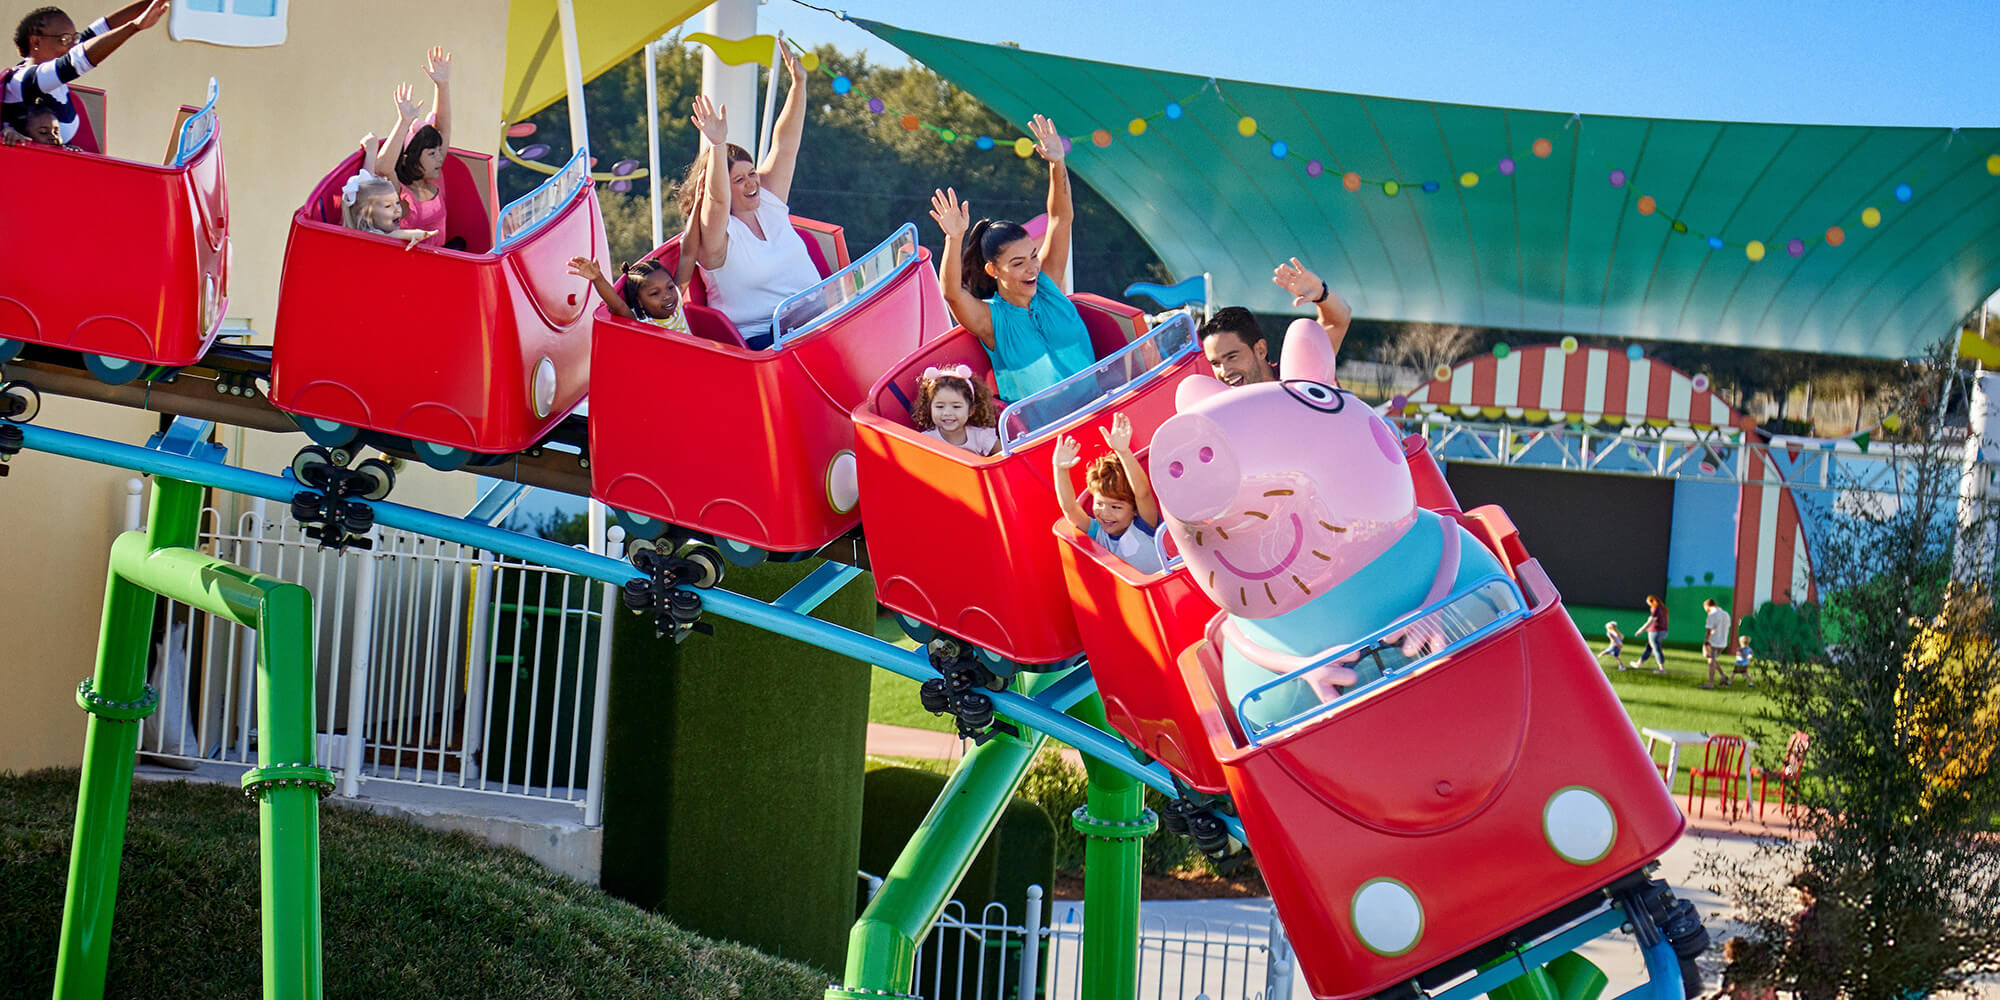 Daddy Pig's Roller Coaster Peppa Pig Park